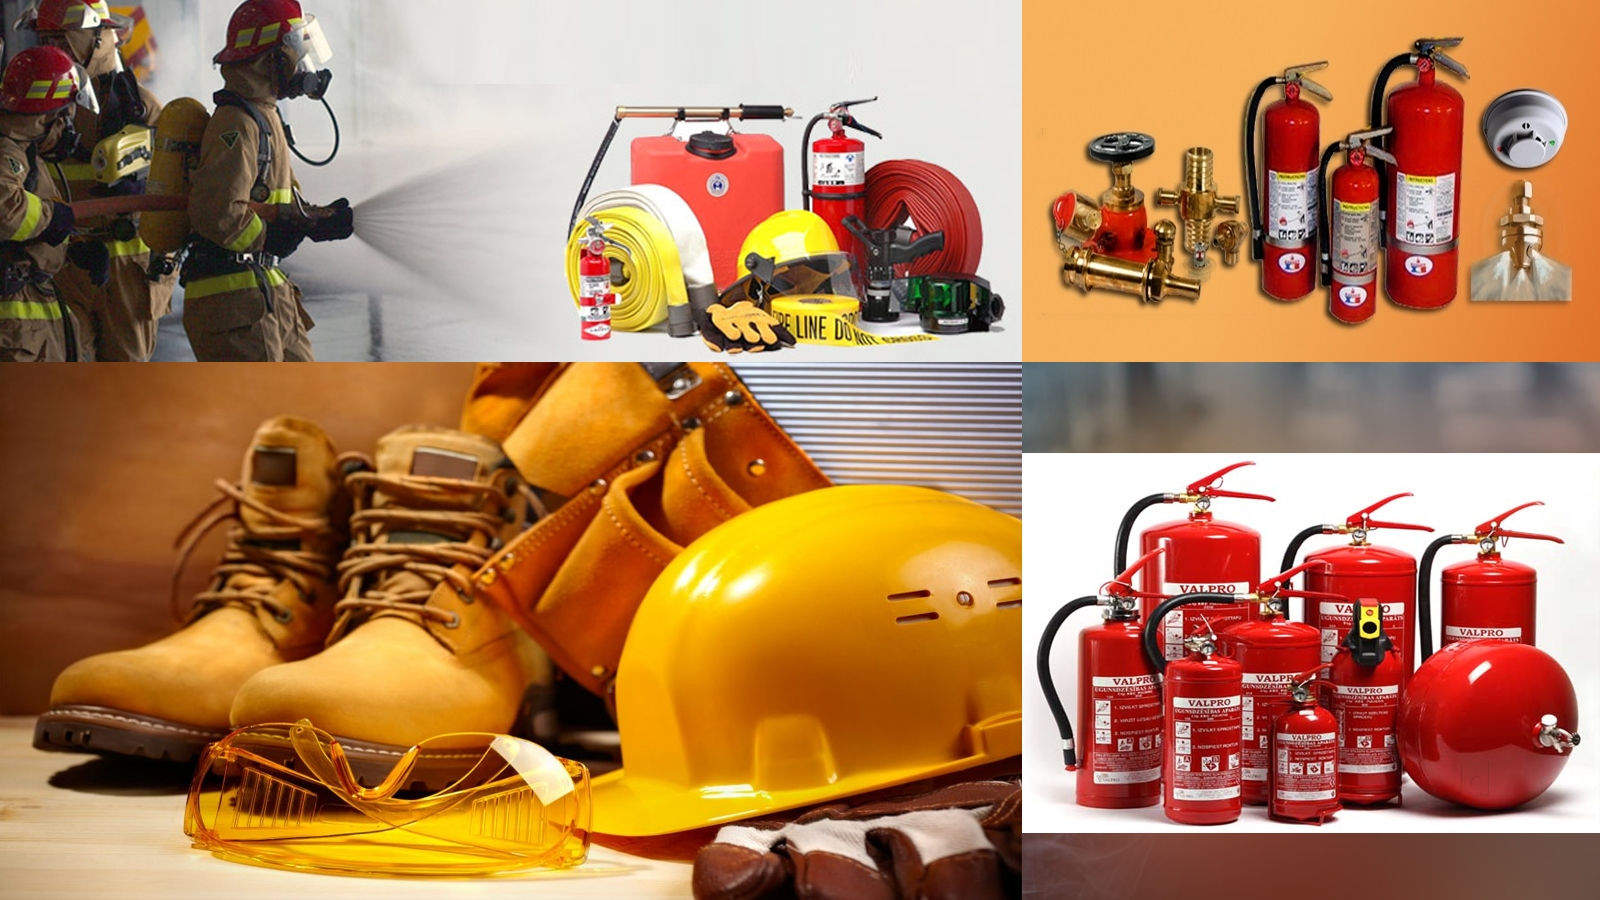 Airport Fire Safety Equipment Market